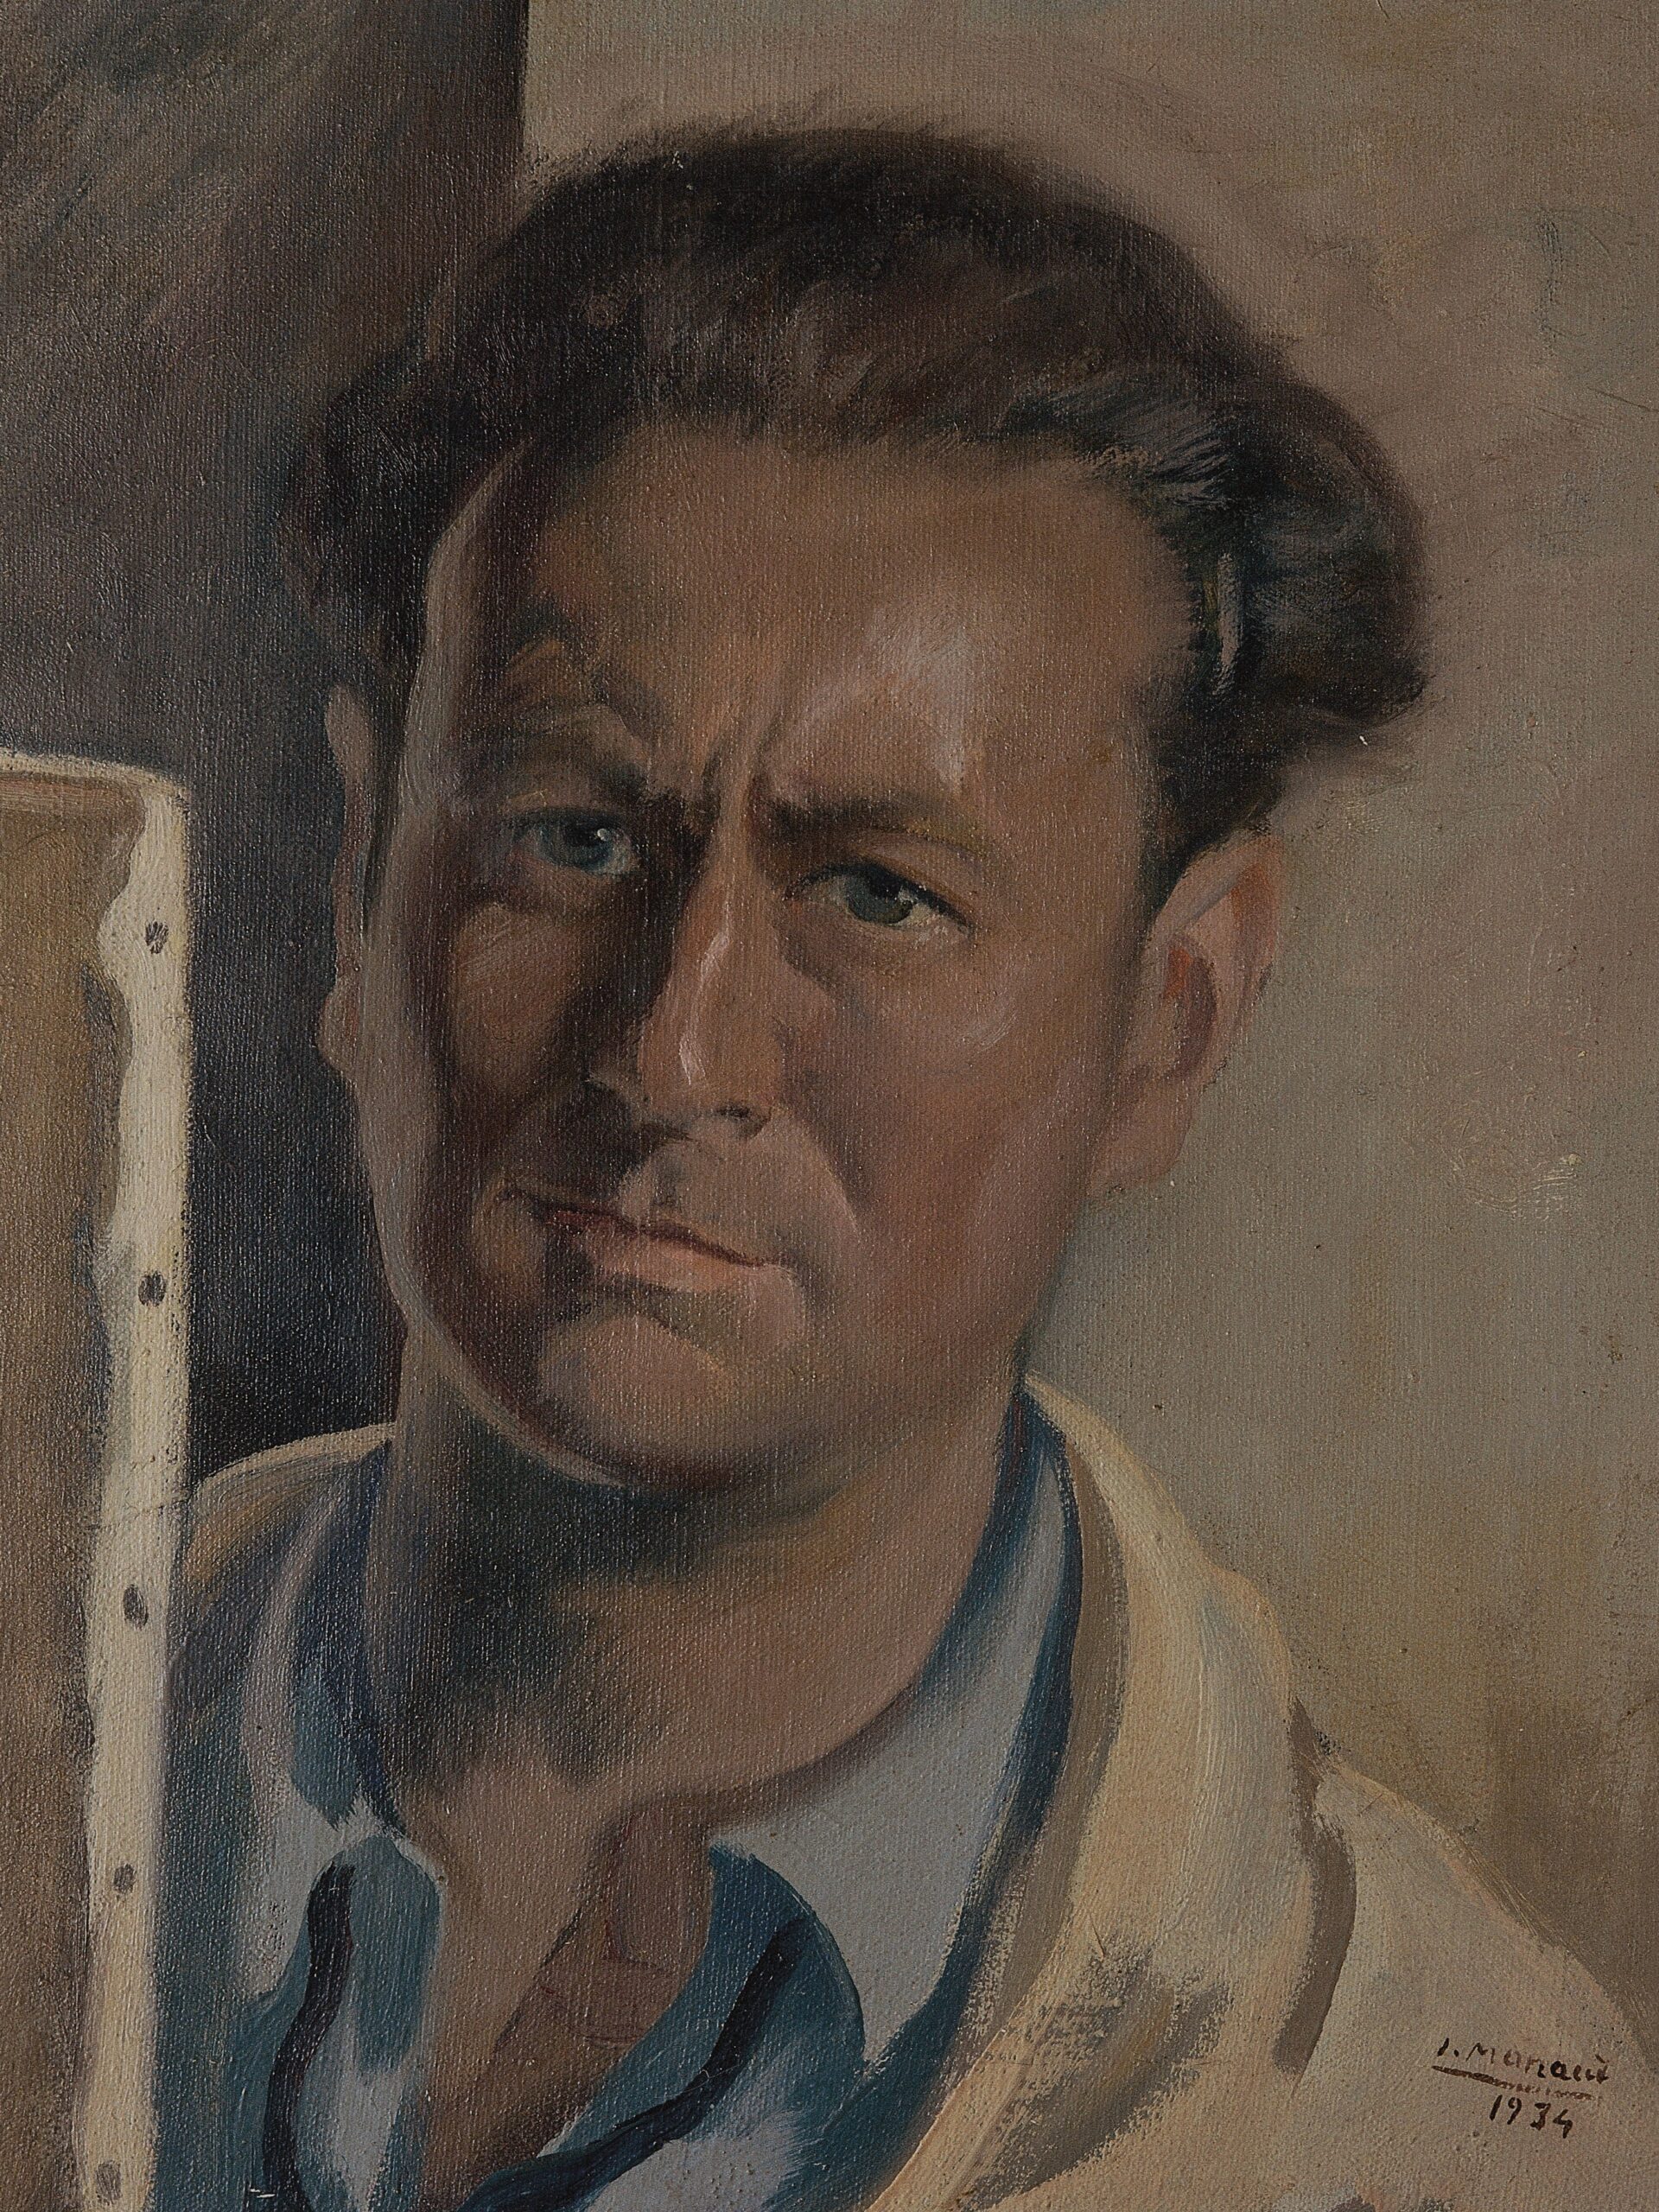 Pintura de José Manaut titulada Autorretrato, 1935. Óleo sobre lienzo.